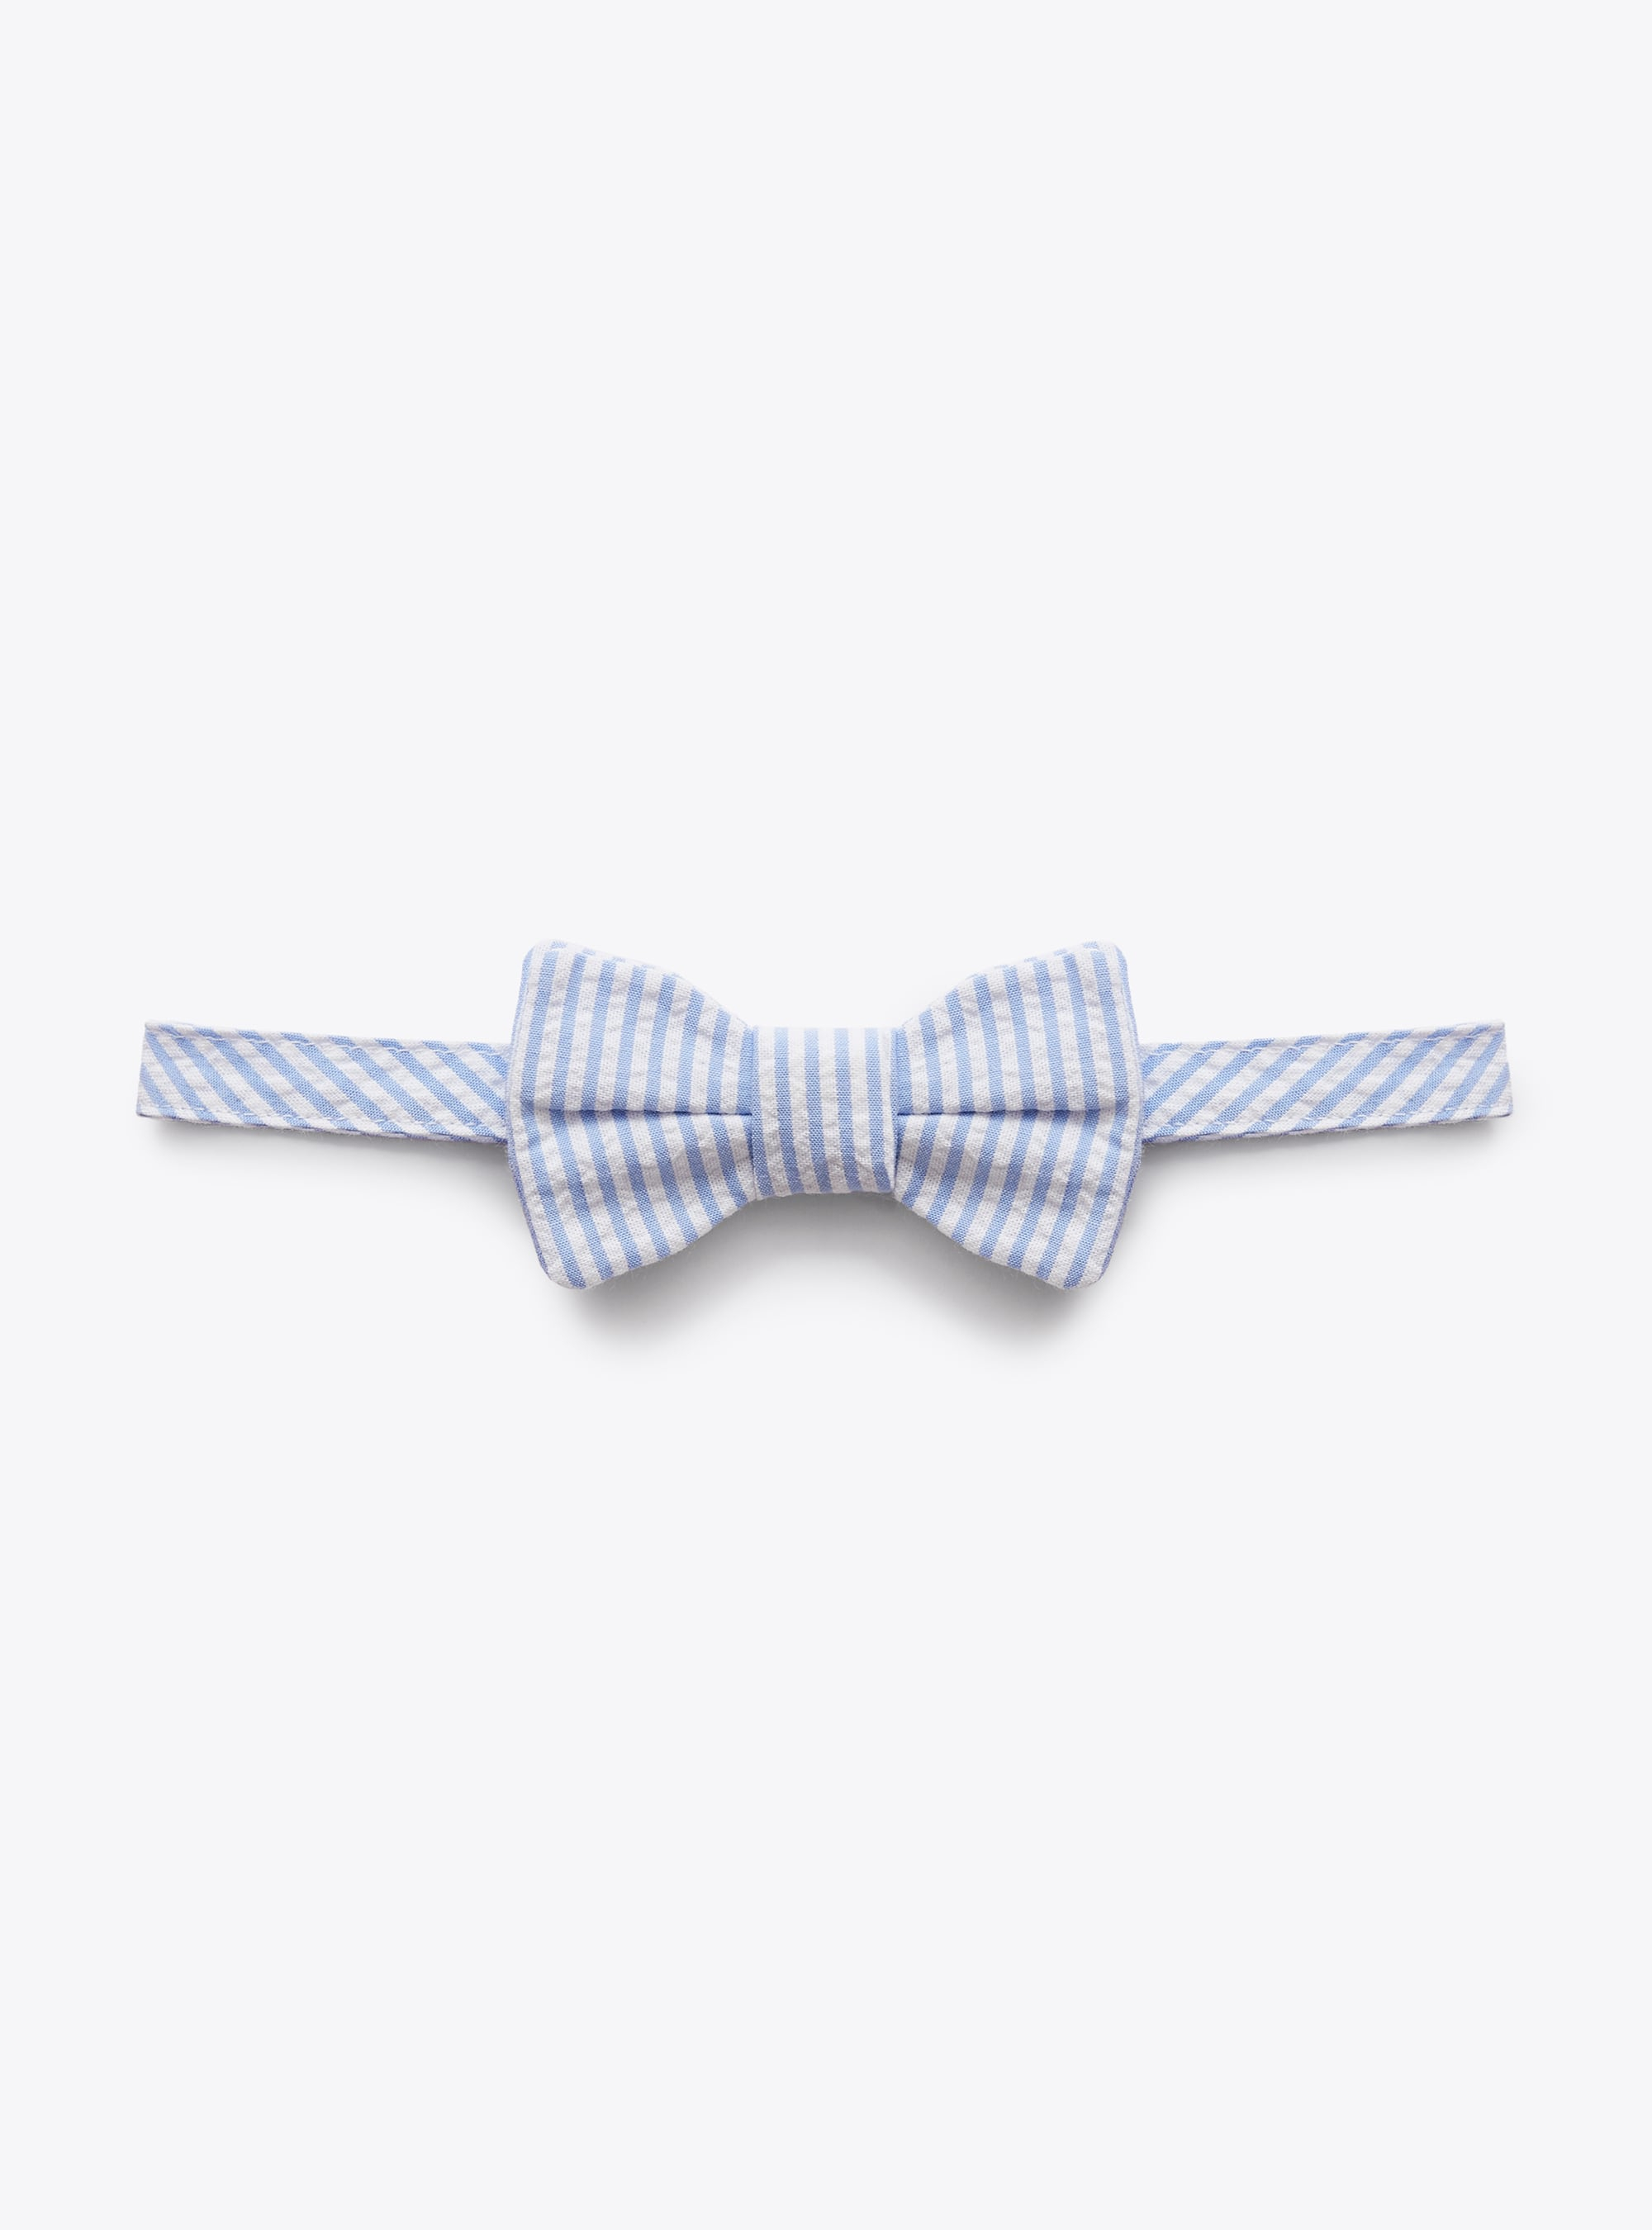 Bow tie in light-blue-striped seersucker - Accessories - Il Gufo